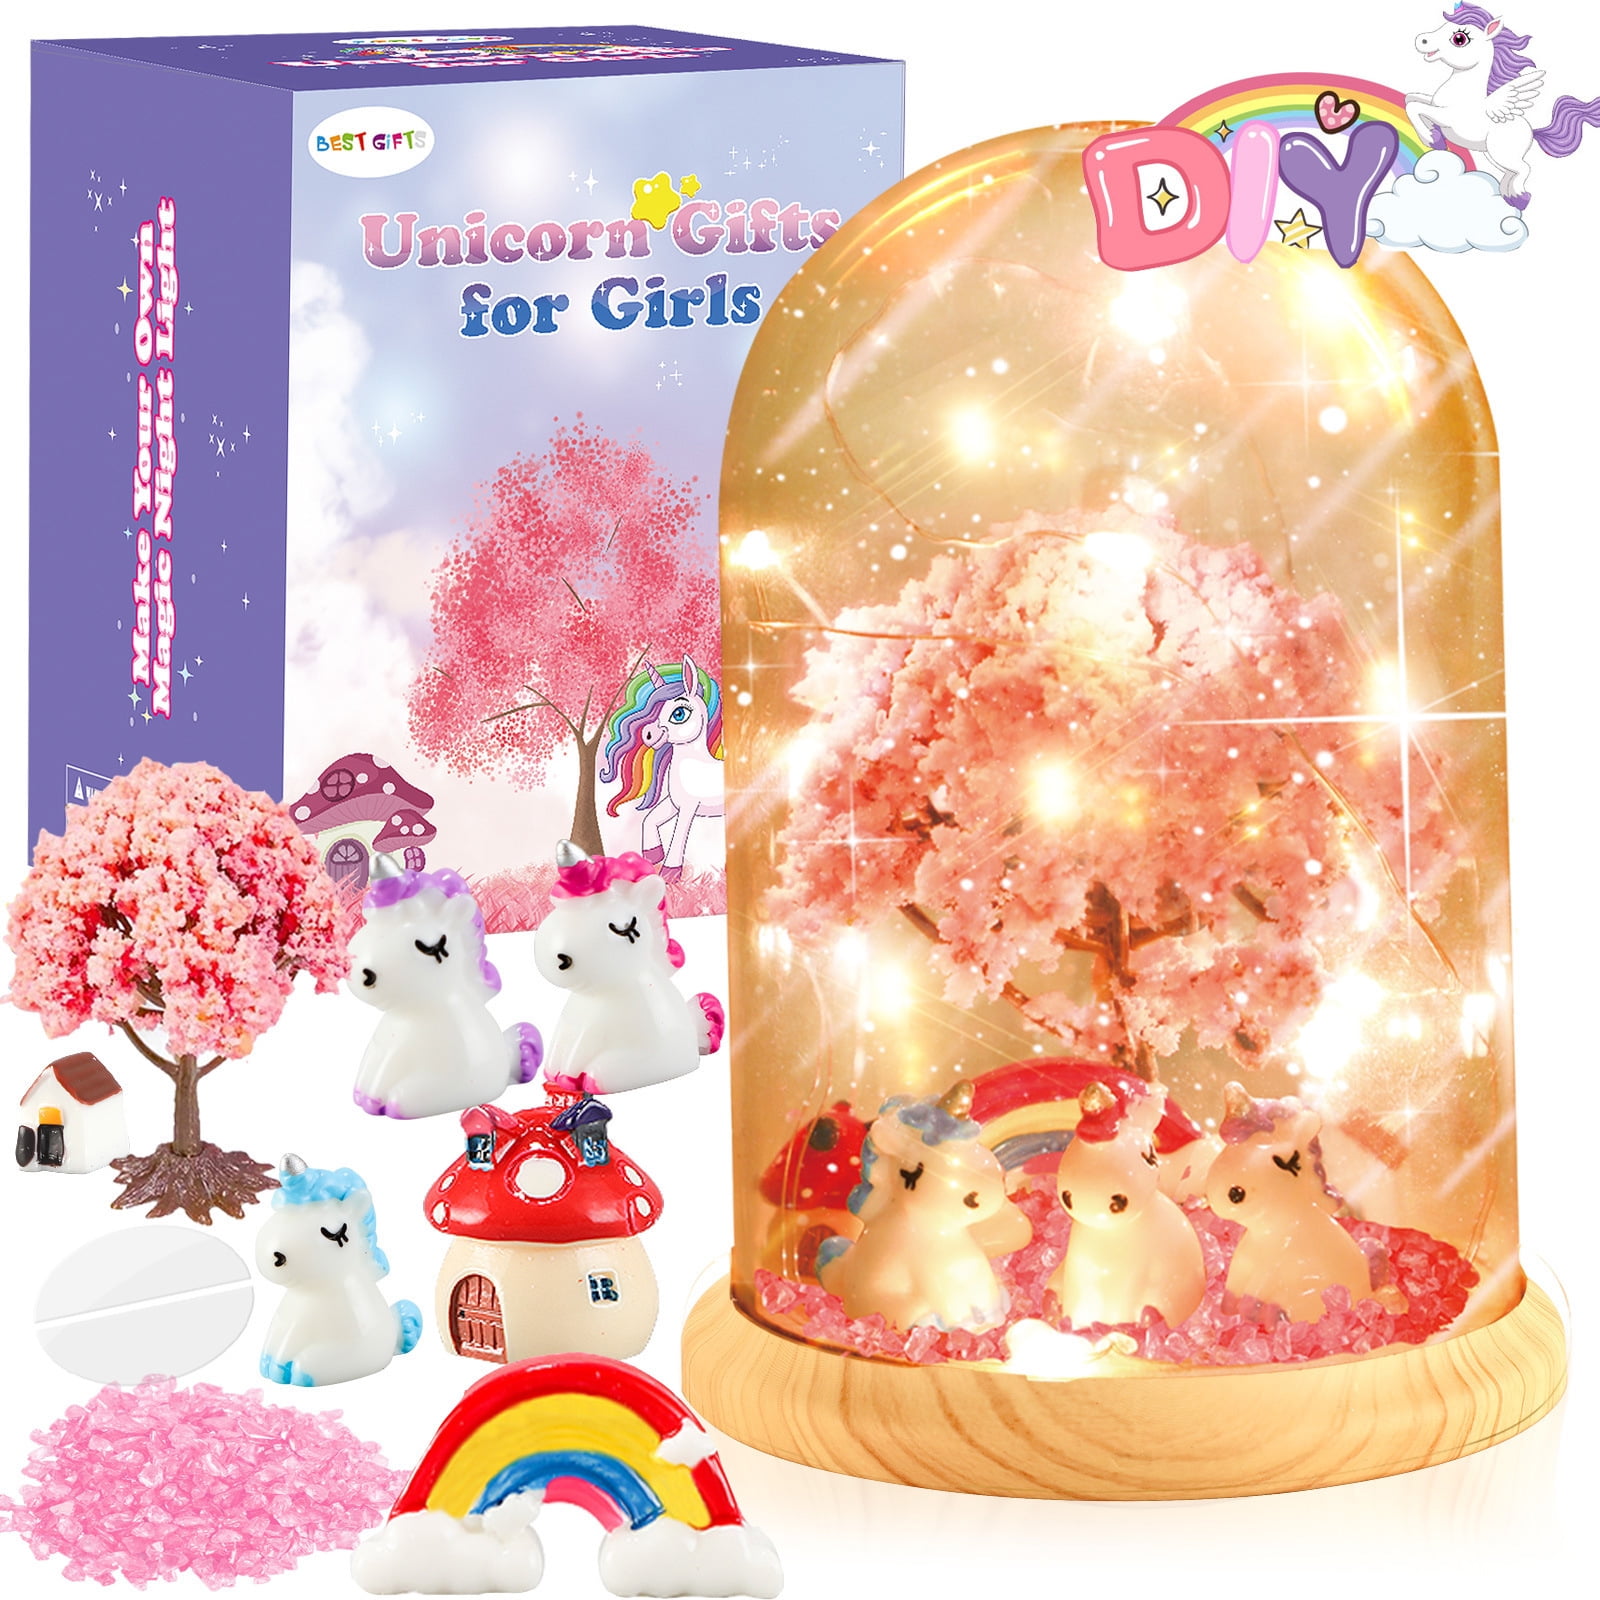  Unicorns Gifts for Girls 5 6 7 8 9 10+ Years Old, Kids Unicorn  Toys with Light Up Plush Star Pillow/ Diary/ Headband/ Eye Mask/ Water  Bottle, Soft Plush Toys Set